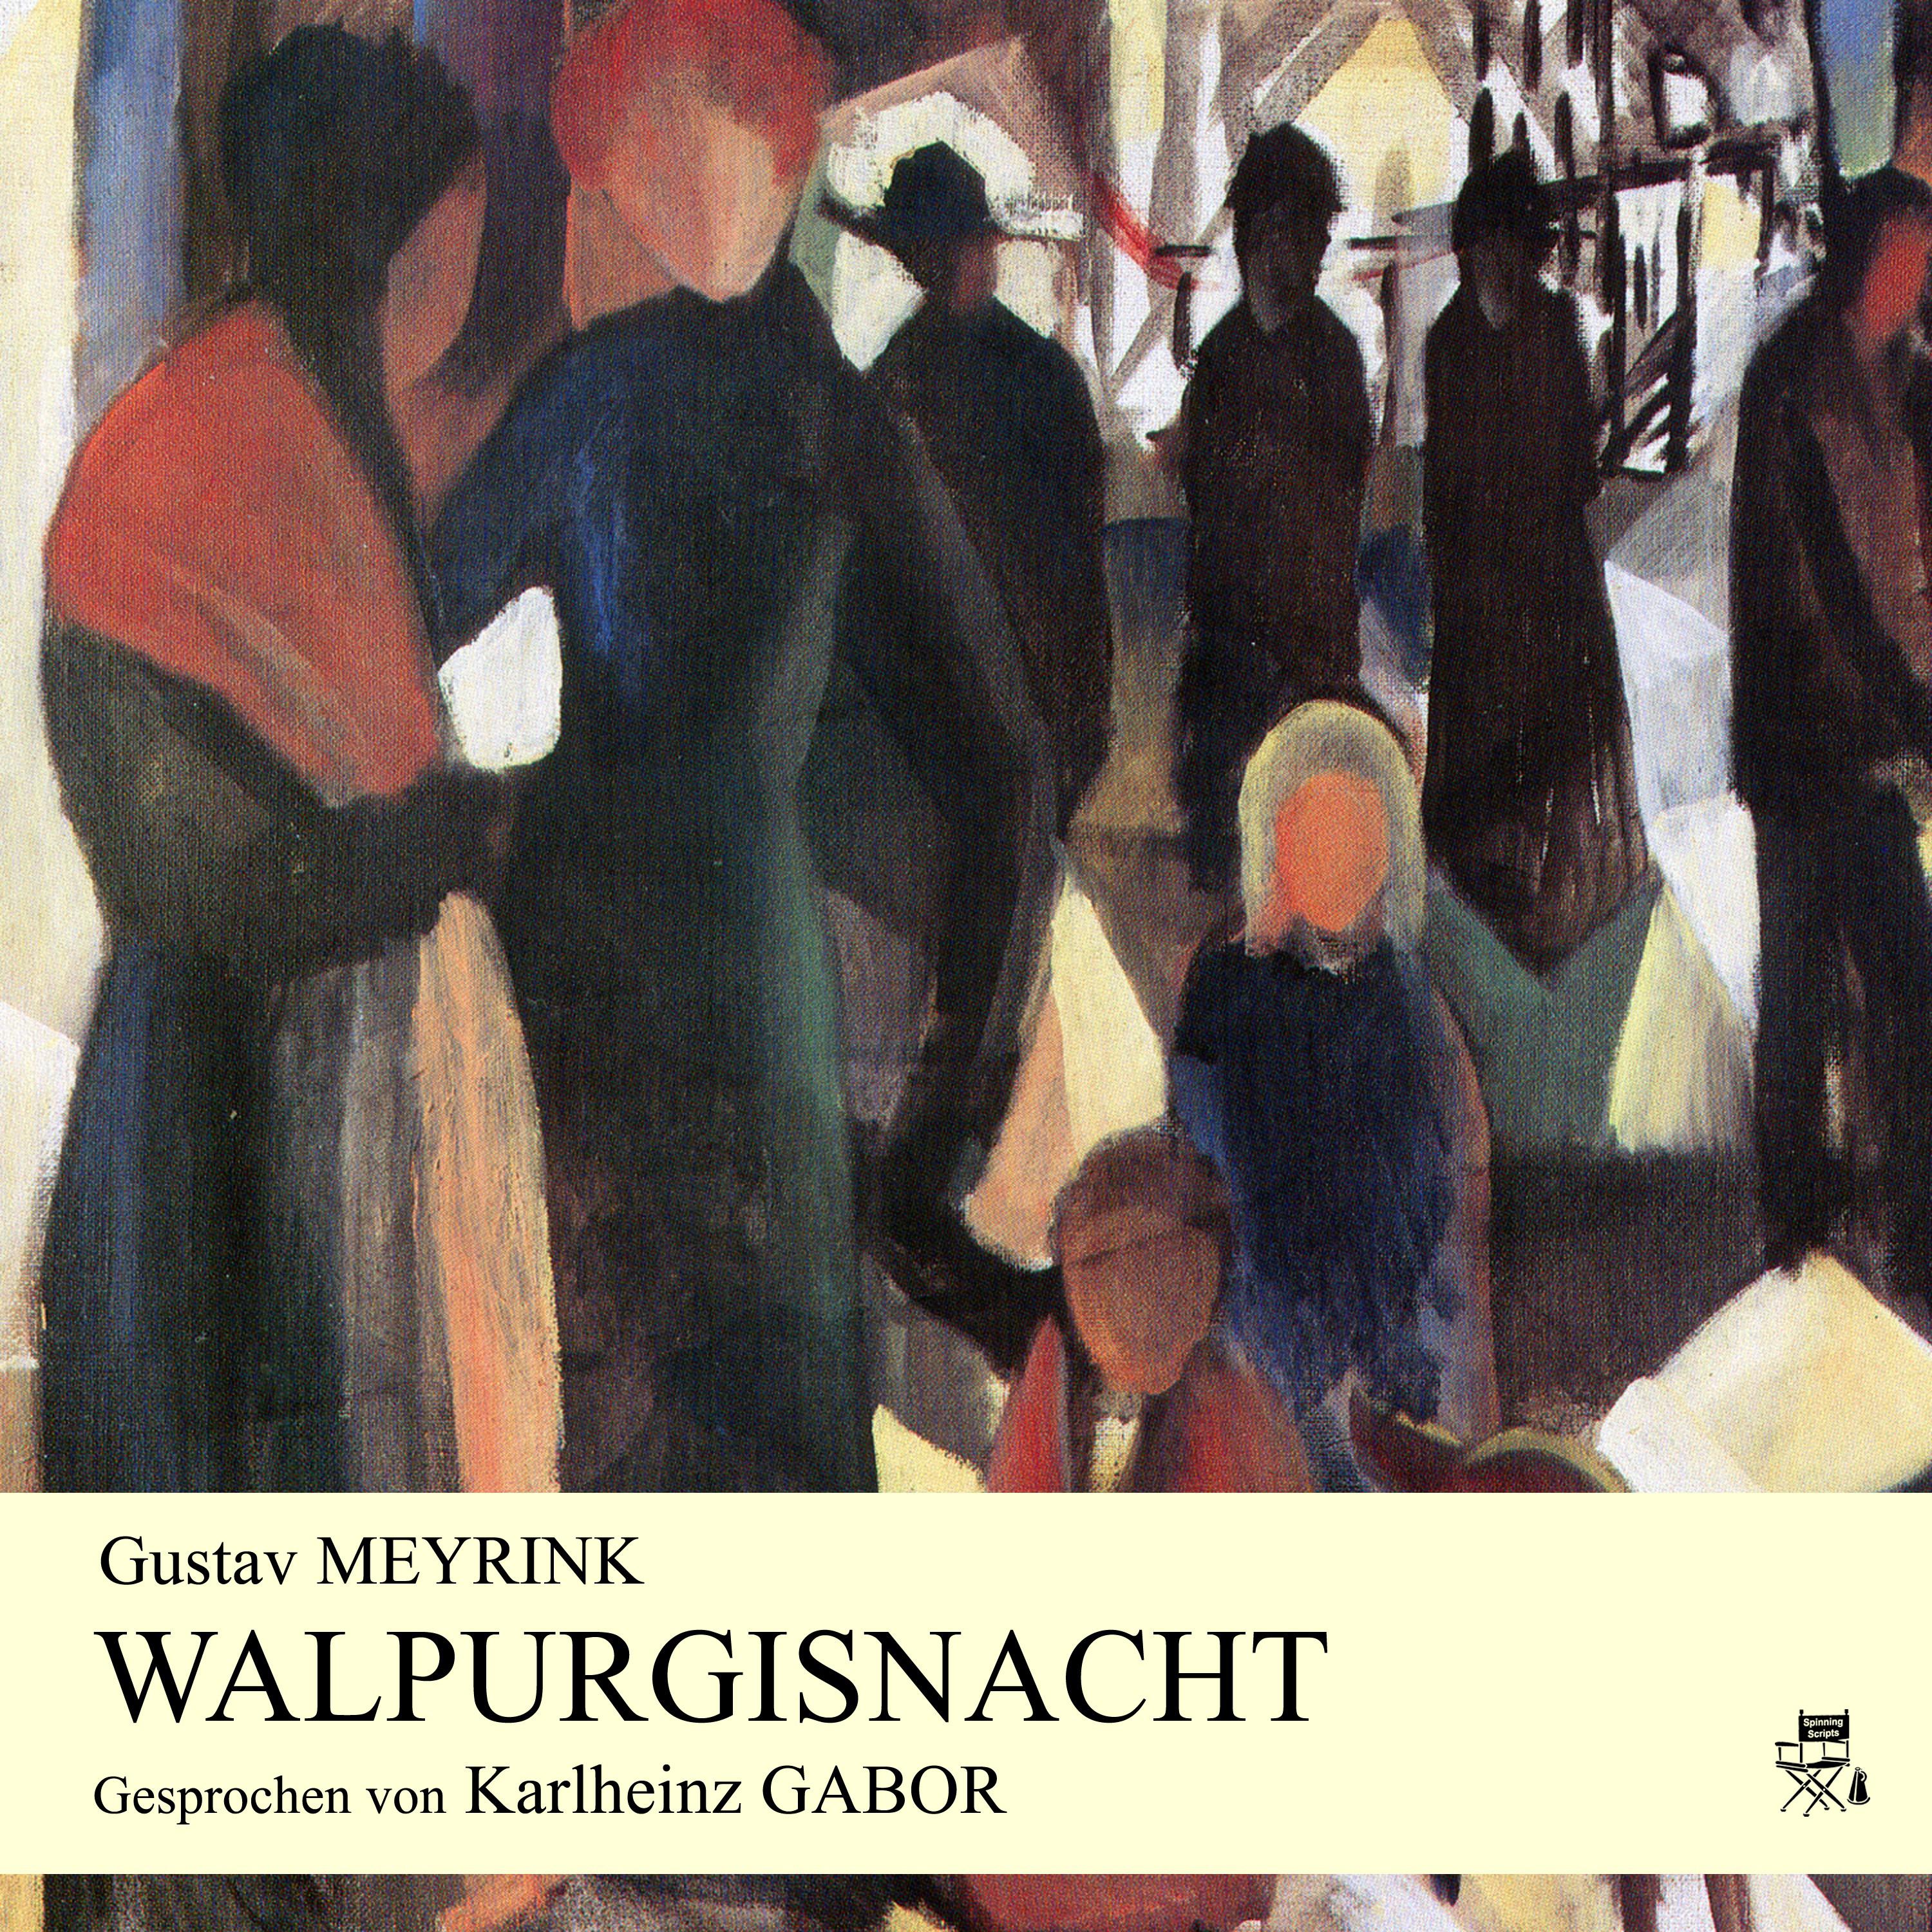 Kapitel 4: Walpurgisnacht (Teil 35)